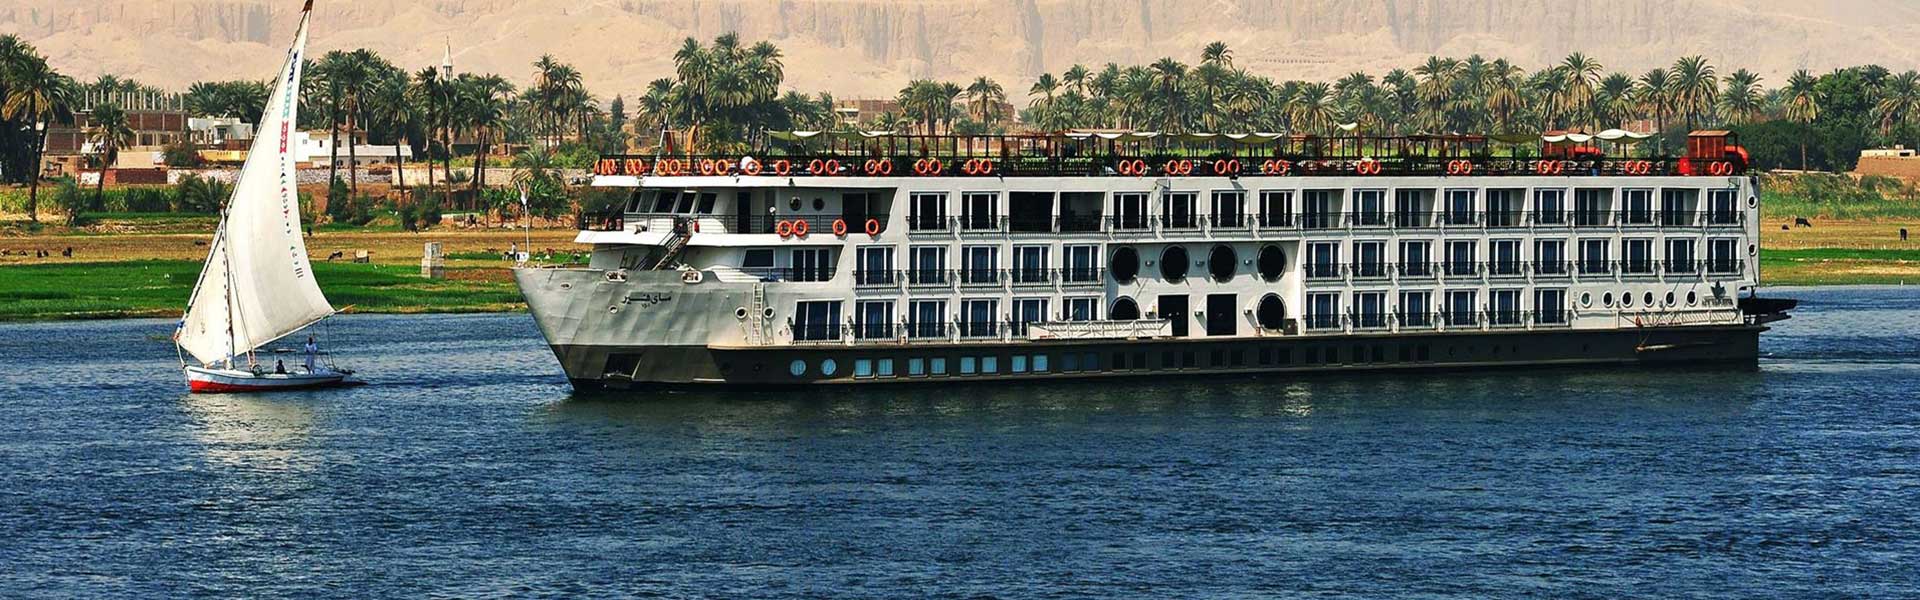 MS MayFair Nile Cruise 4 Days from Aswan